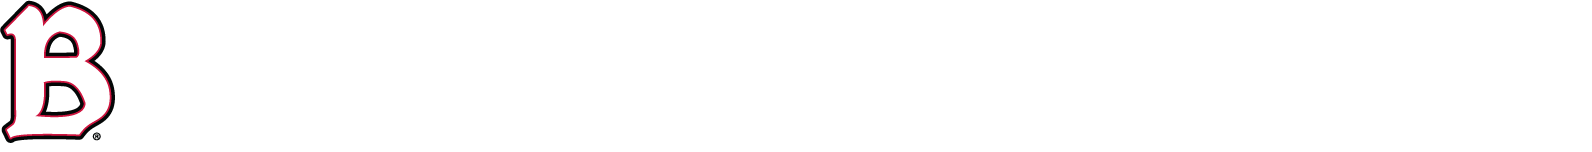 Benedictine University horizontal logo